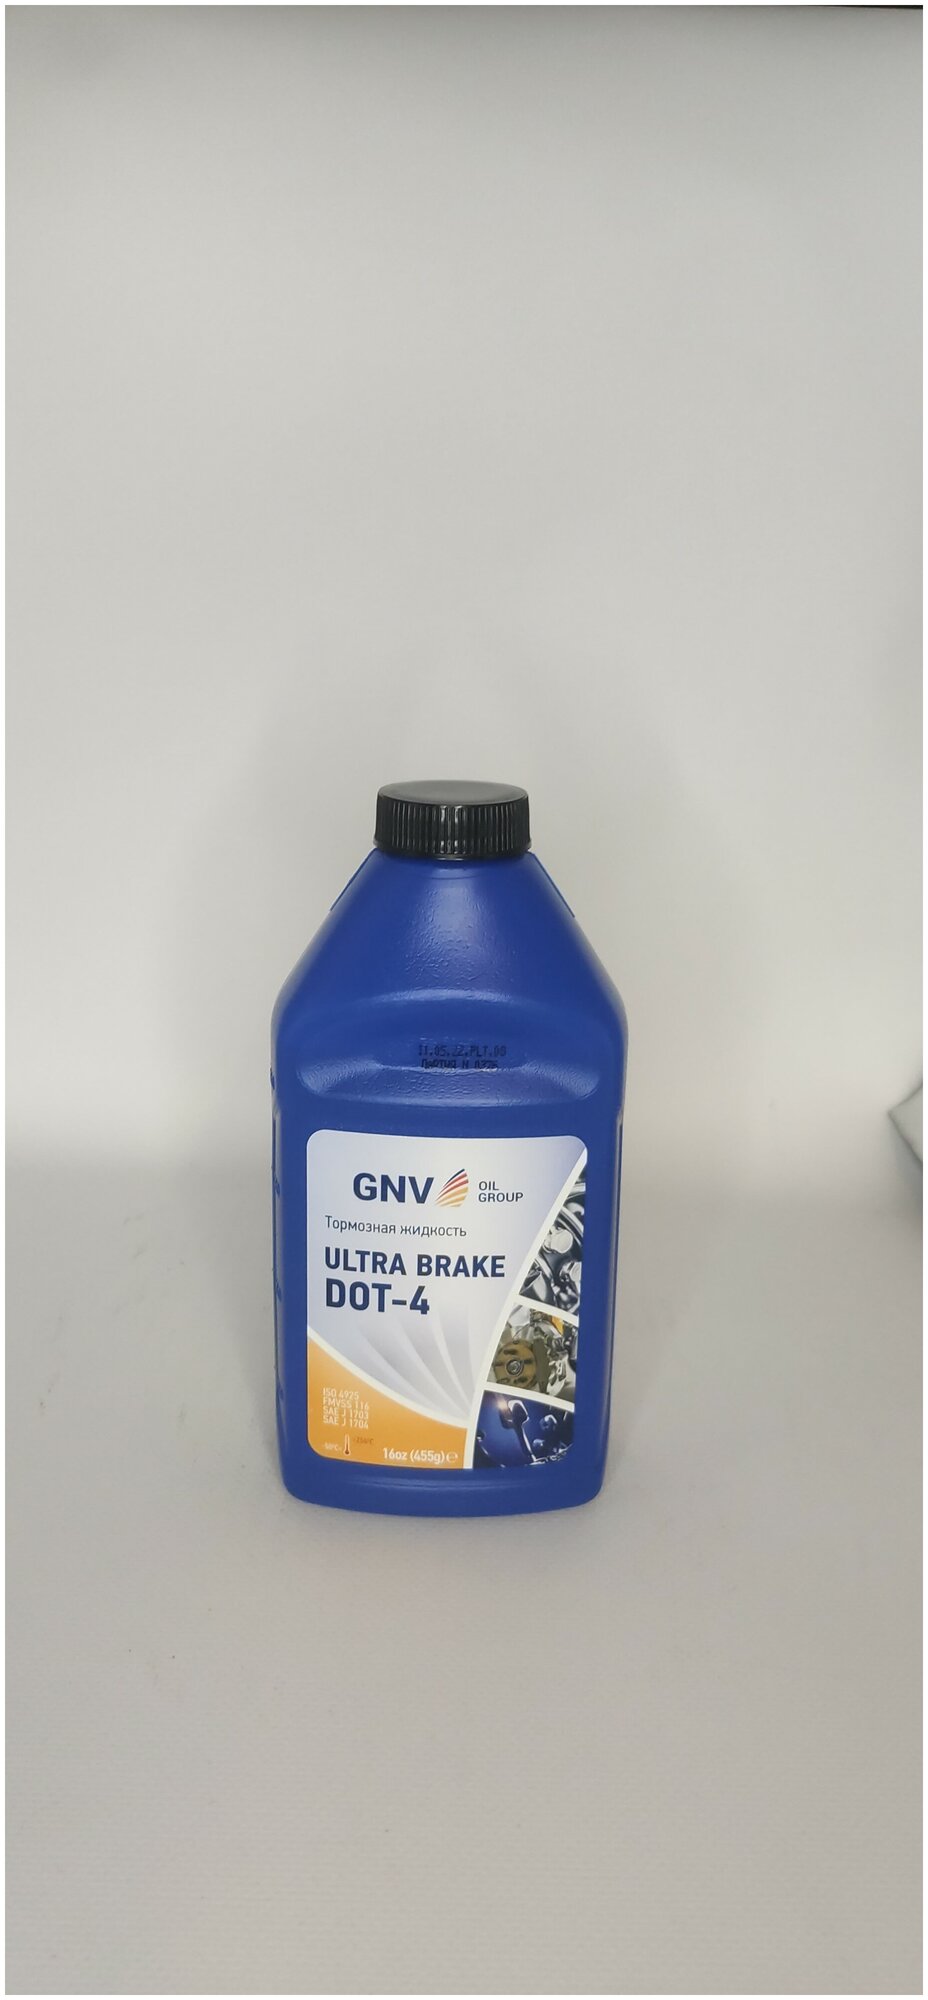 GNV Ultra Brake DOT-4 (455 .)